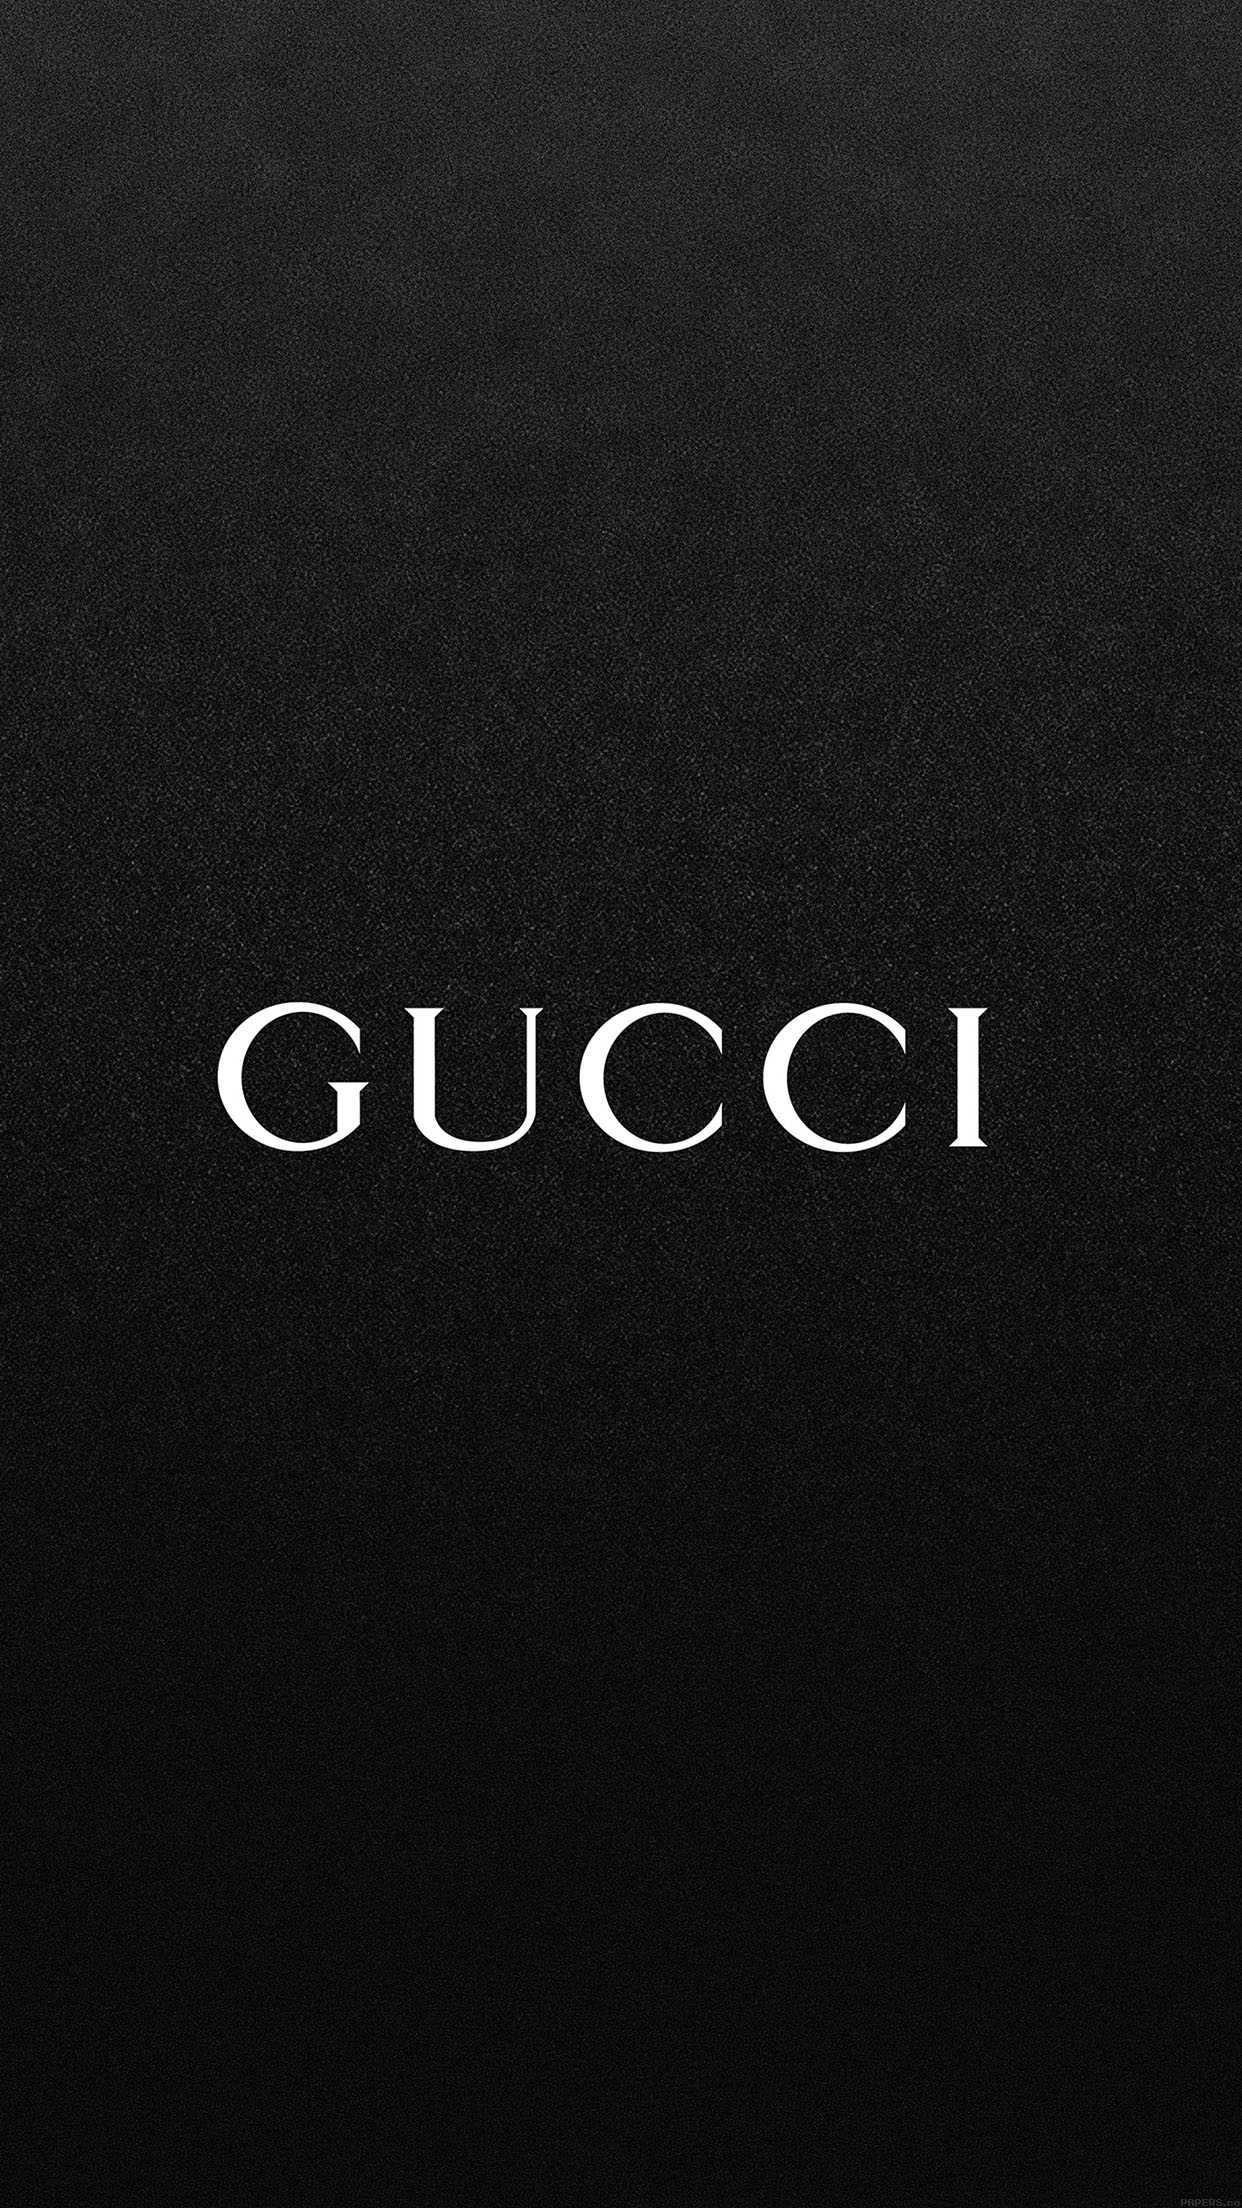 Black Gucci iPhone Wallpaper Free Black Gucci iPhone Background